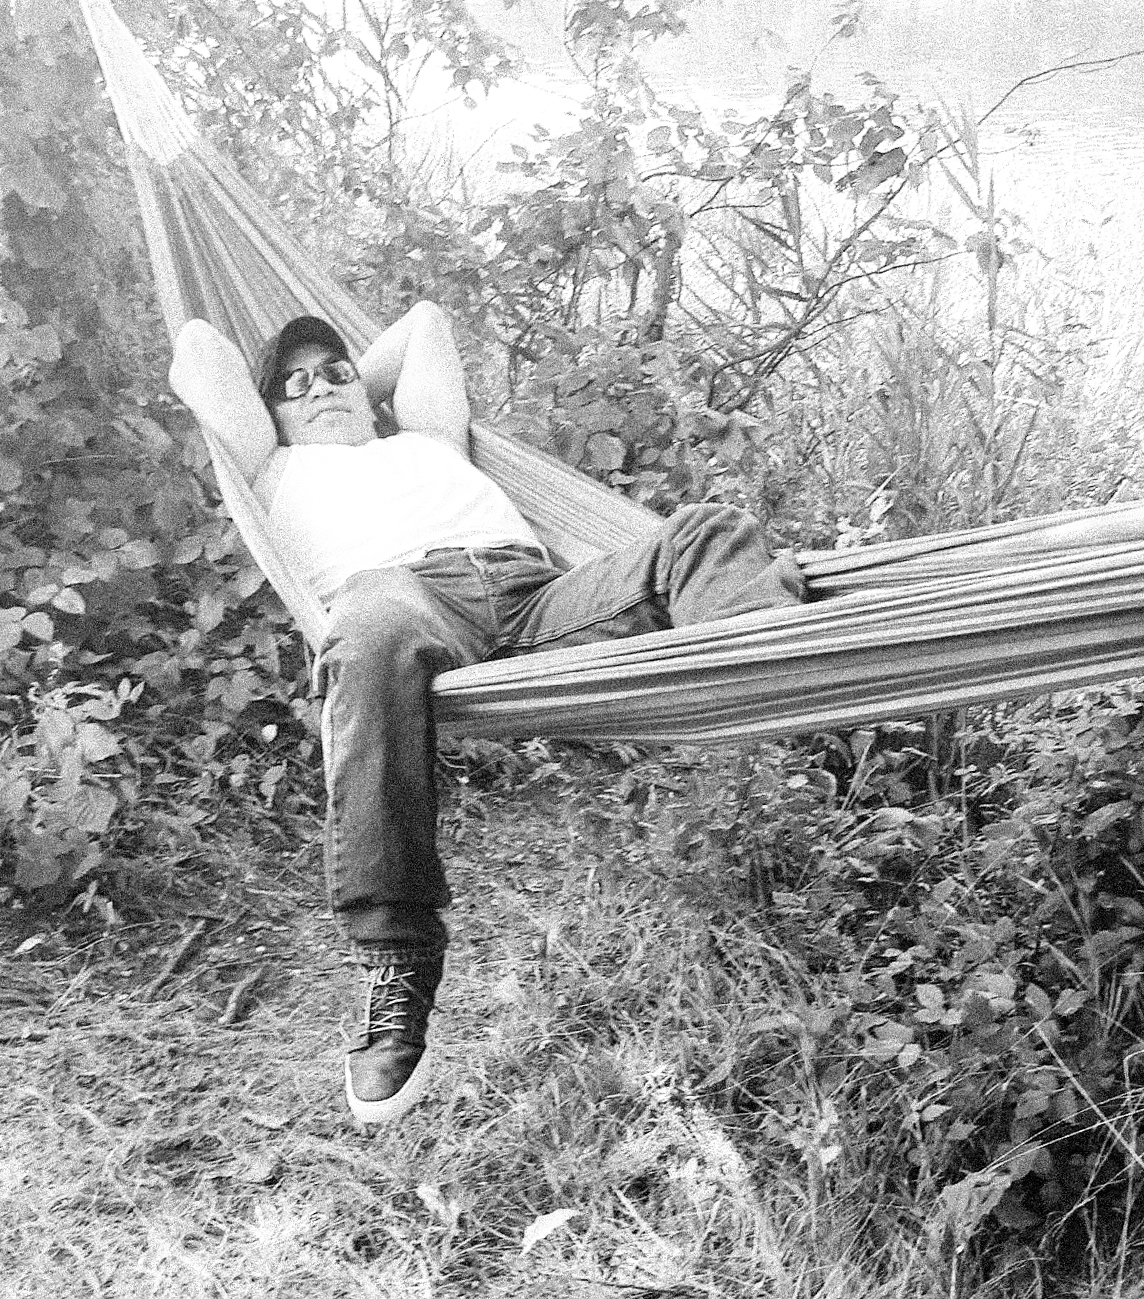 Antonio in hammock (I edited photo found on FB)